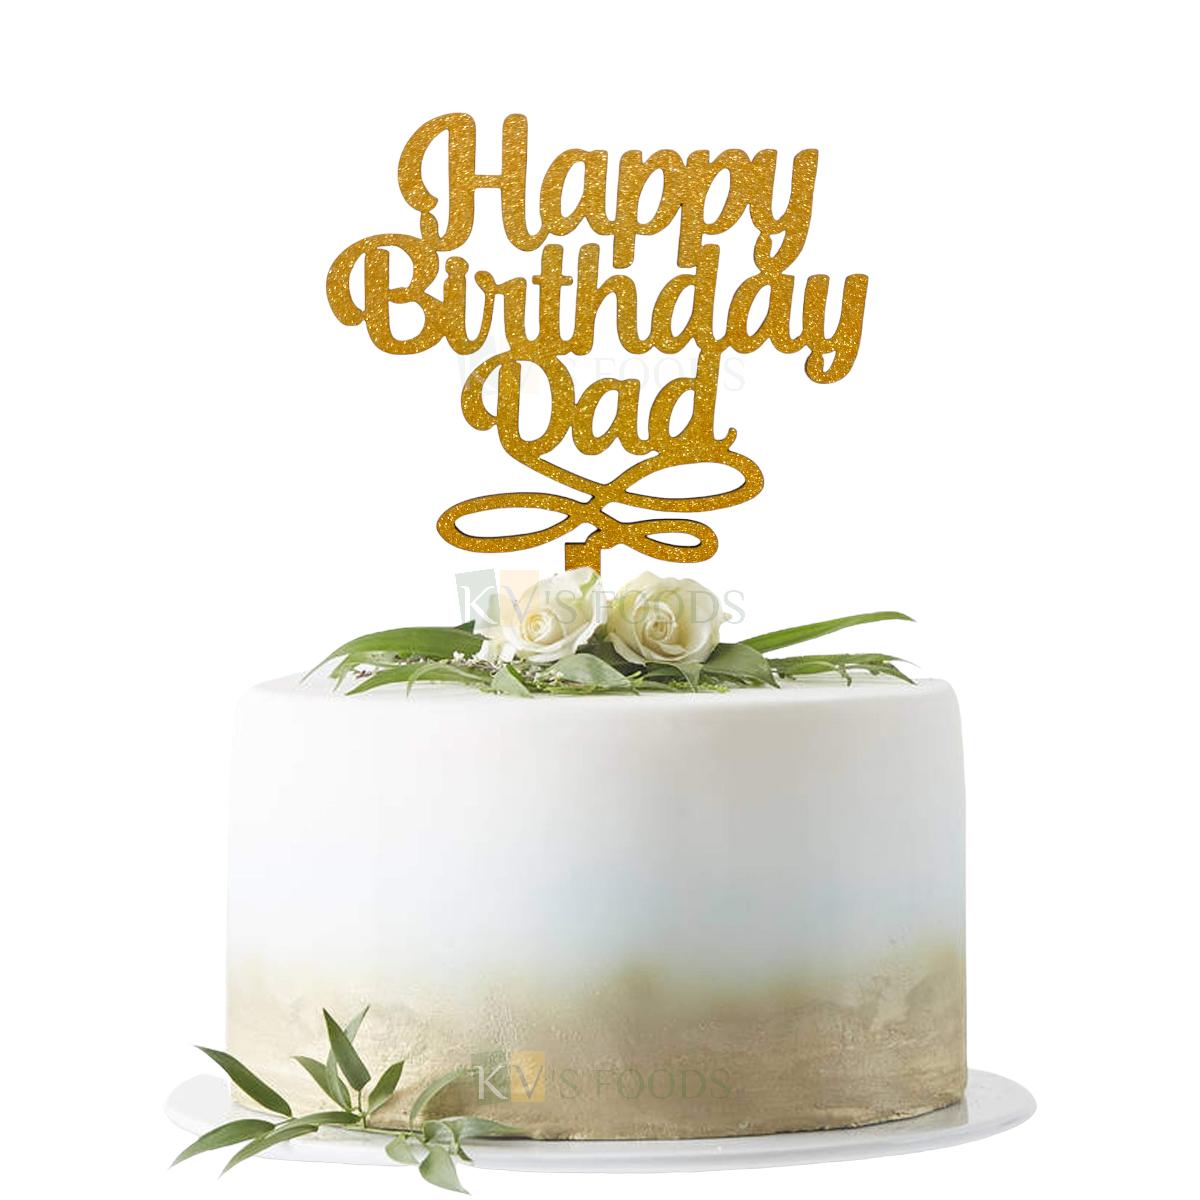 1PC Golden Shiny Glitter MDF Happy Birthday Dad Cake Topper, Daddy Happy Birthday Cake Toppers, Unique Elegant Font Design Cake Topper, Fathers Birthday Celebrations Cake Insert And Decorations